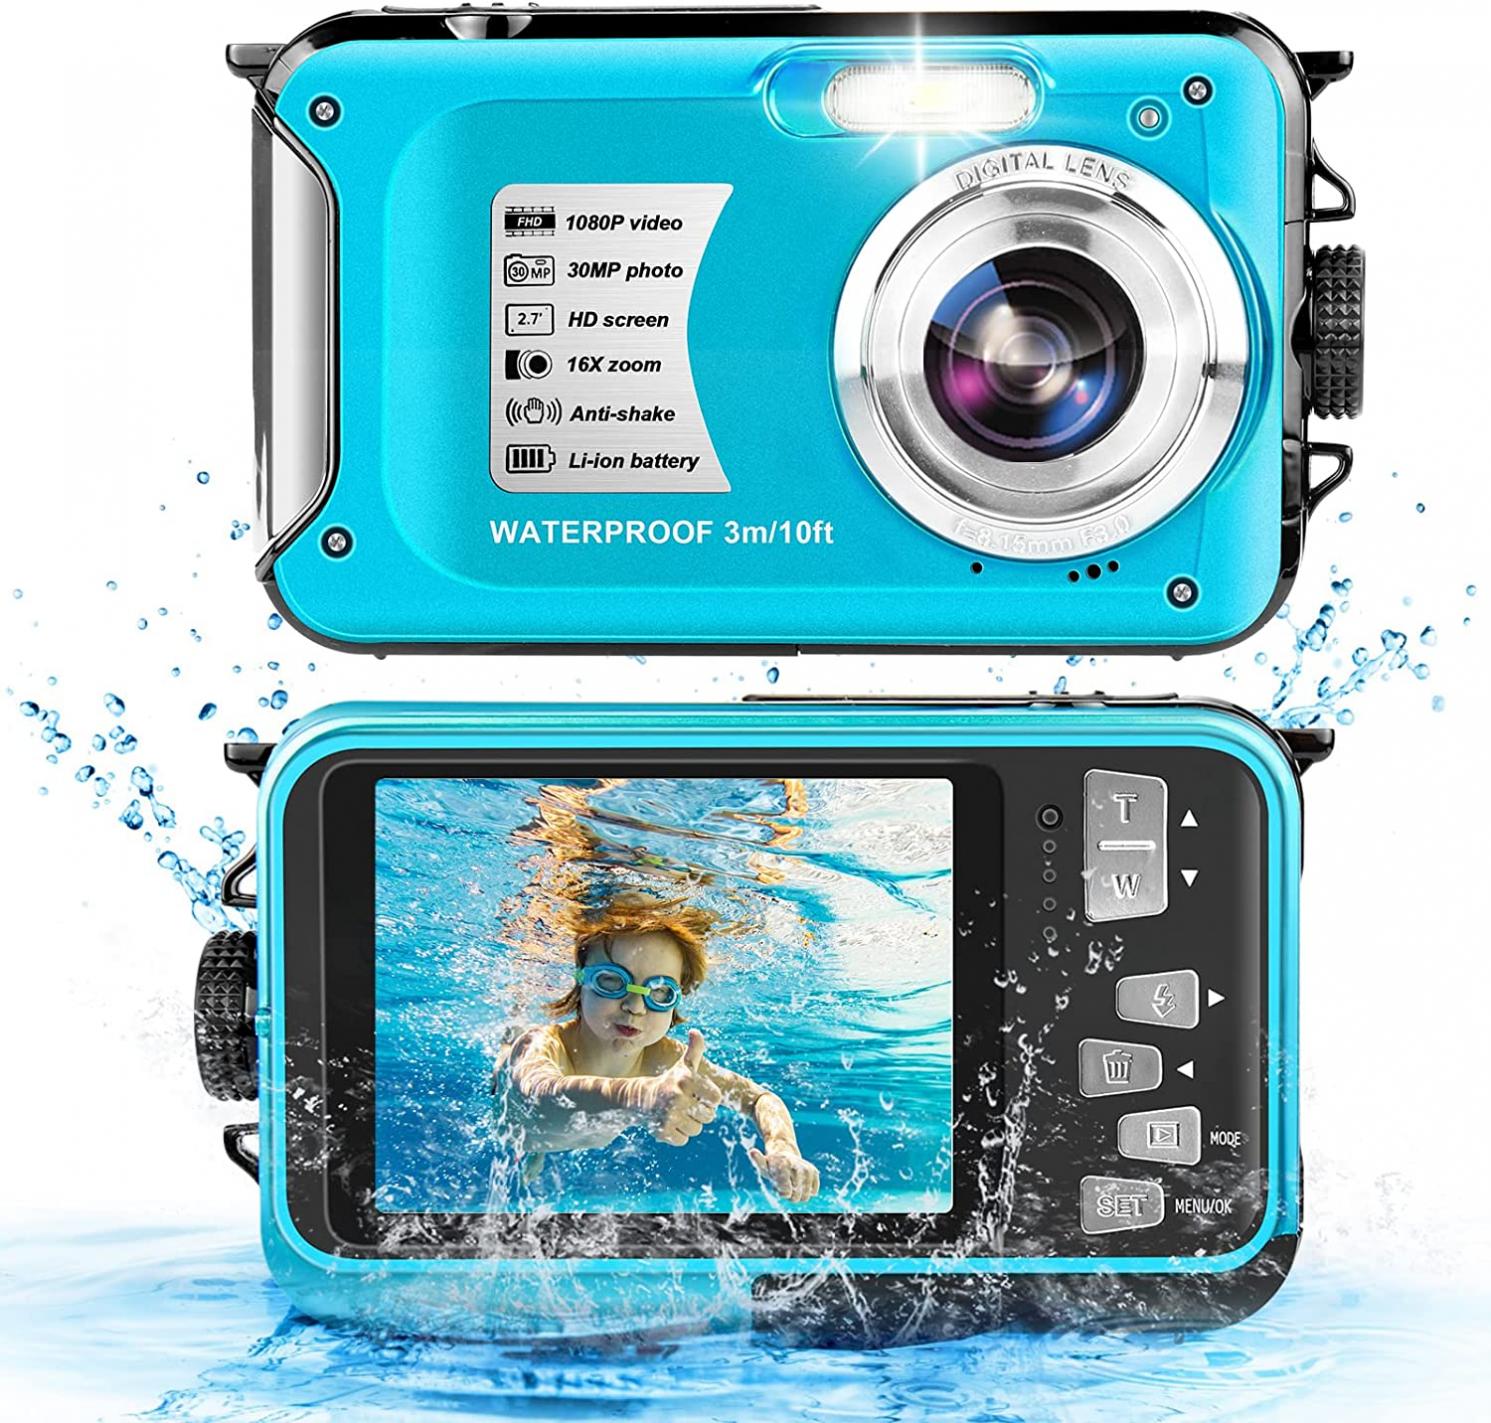 Waterproof Camera 10FT Underwater Camera 30MP 1080P HD Video Resolution 16X Zoom Waterproof Digital Camera for Snorkeling,Vacation(Blue)